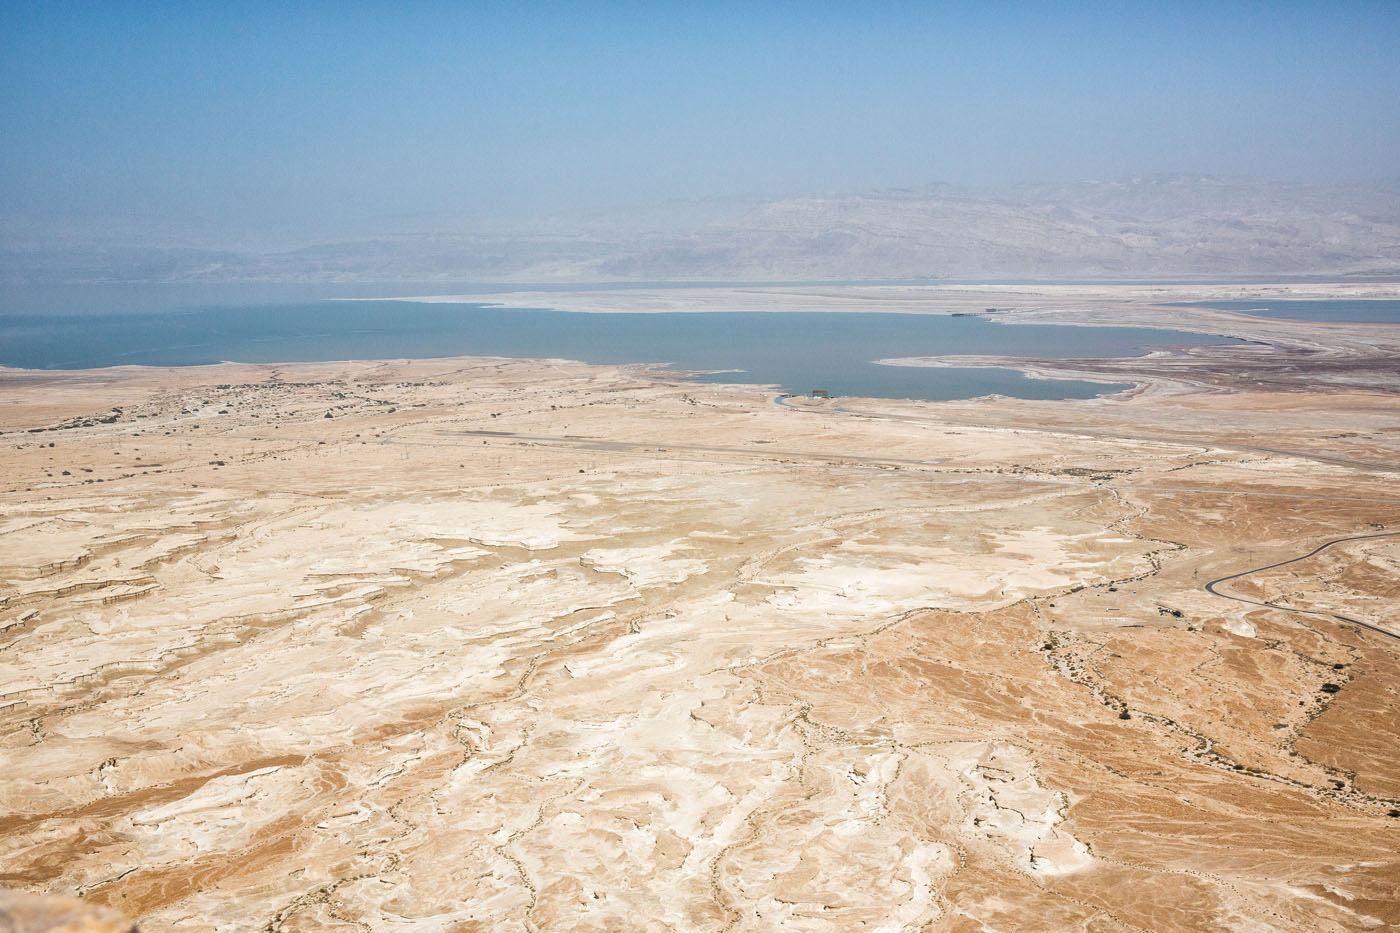 Dead Sea View from Masada